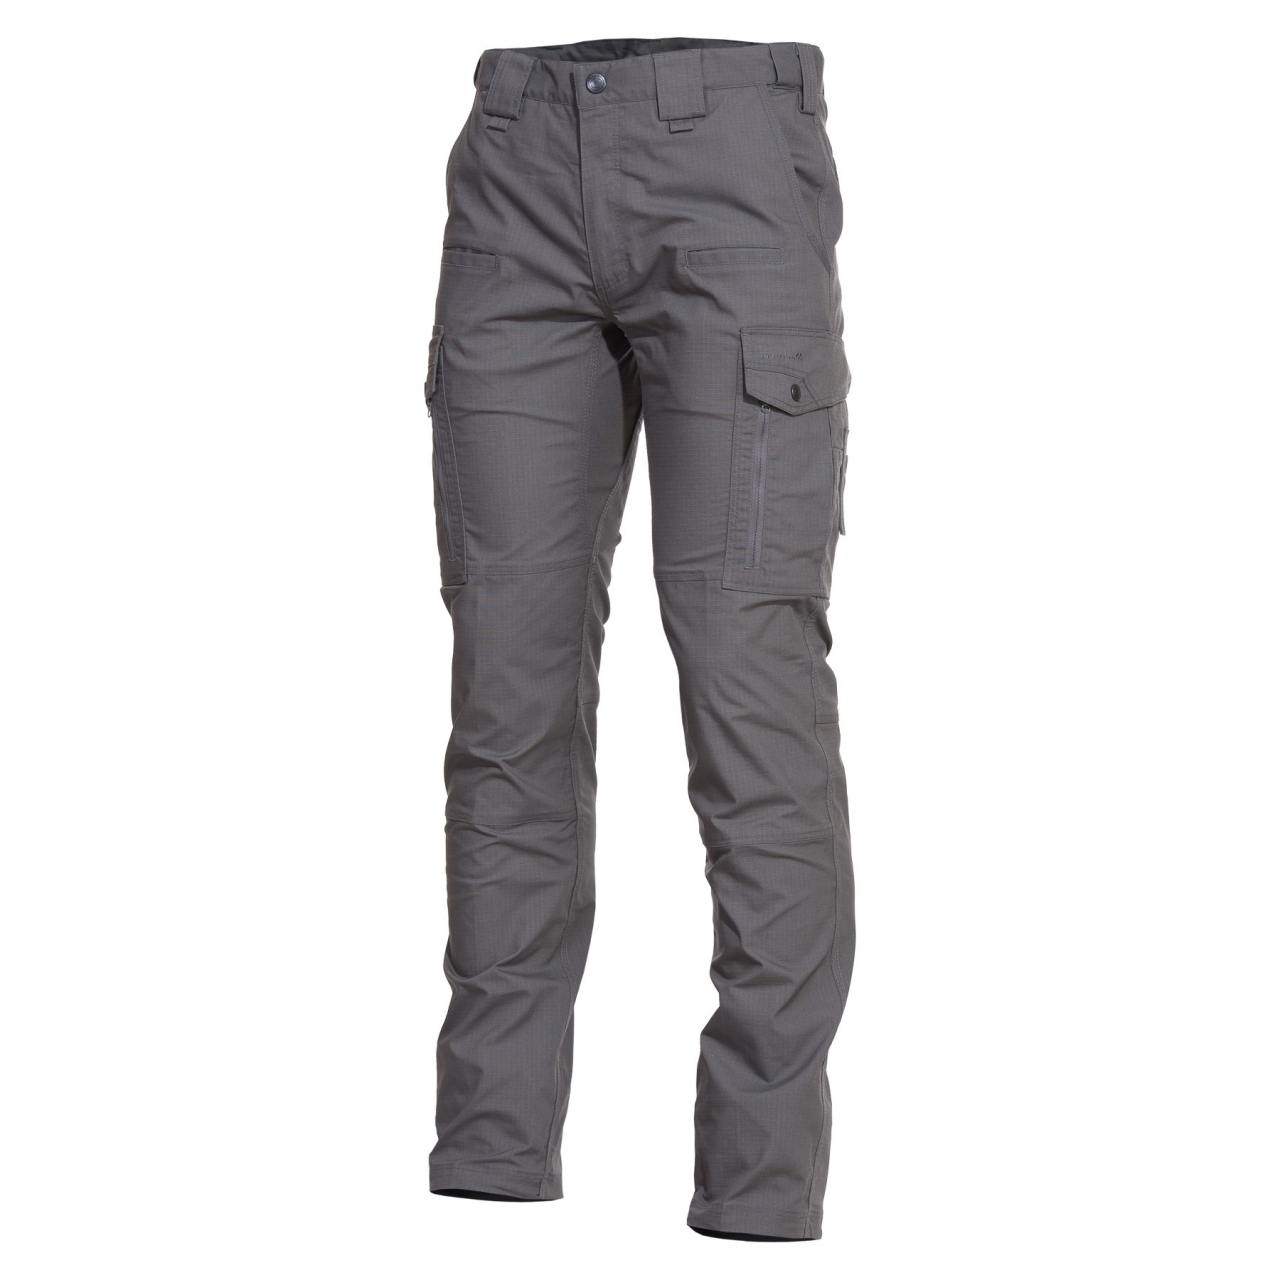 Kalhoty Pentagon Ranger 2.0 - šedé, 58 L